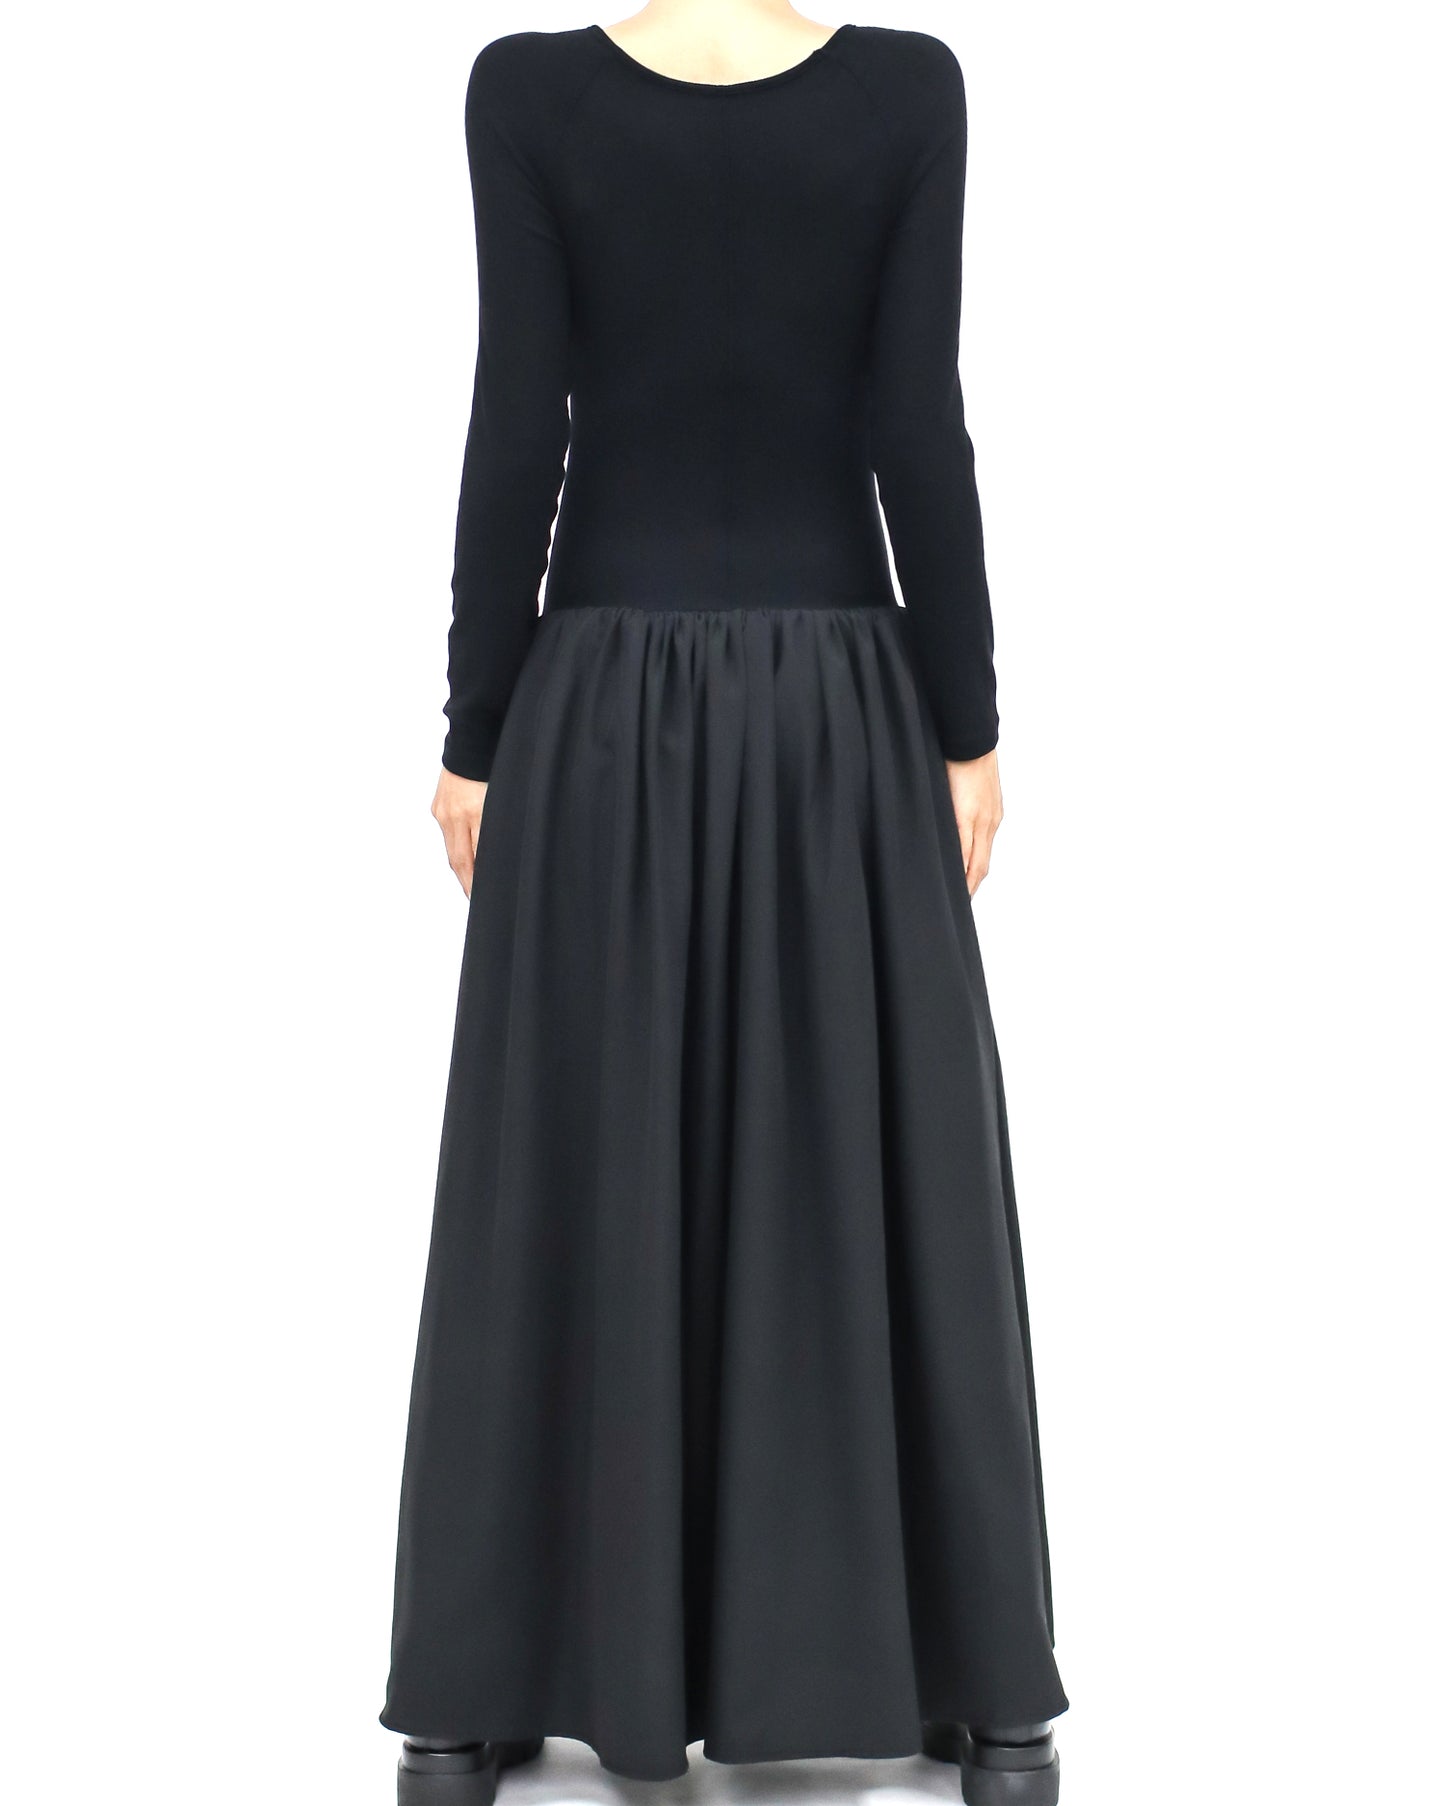 black flare longline dress *pre-order*